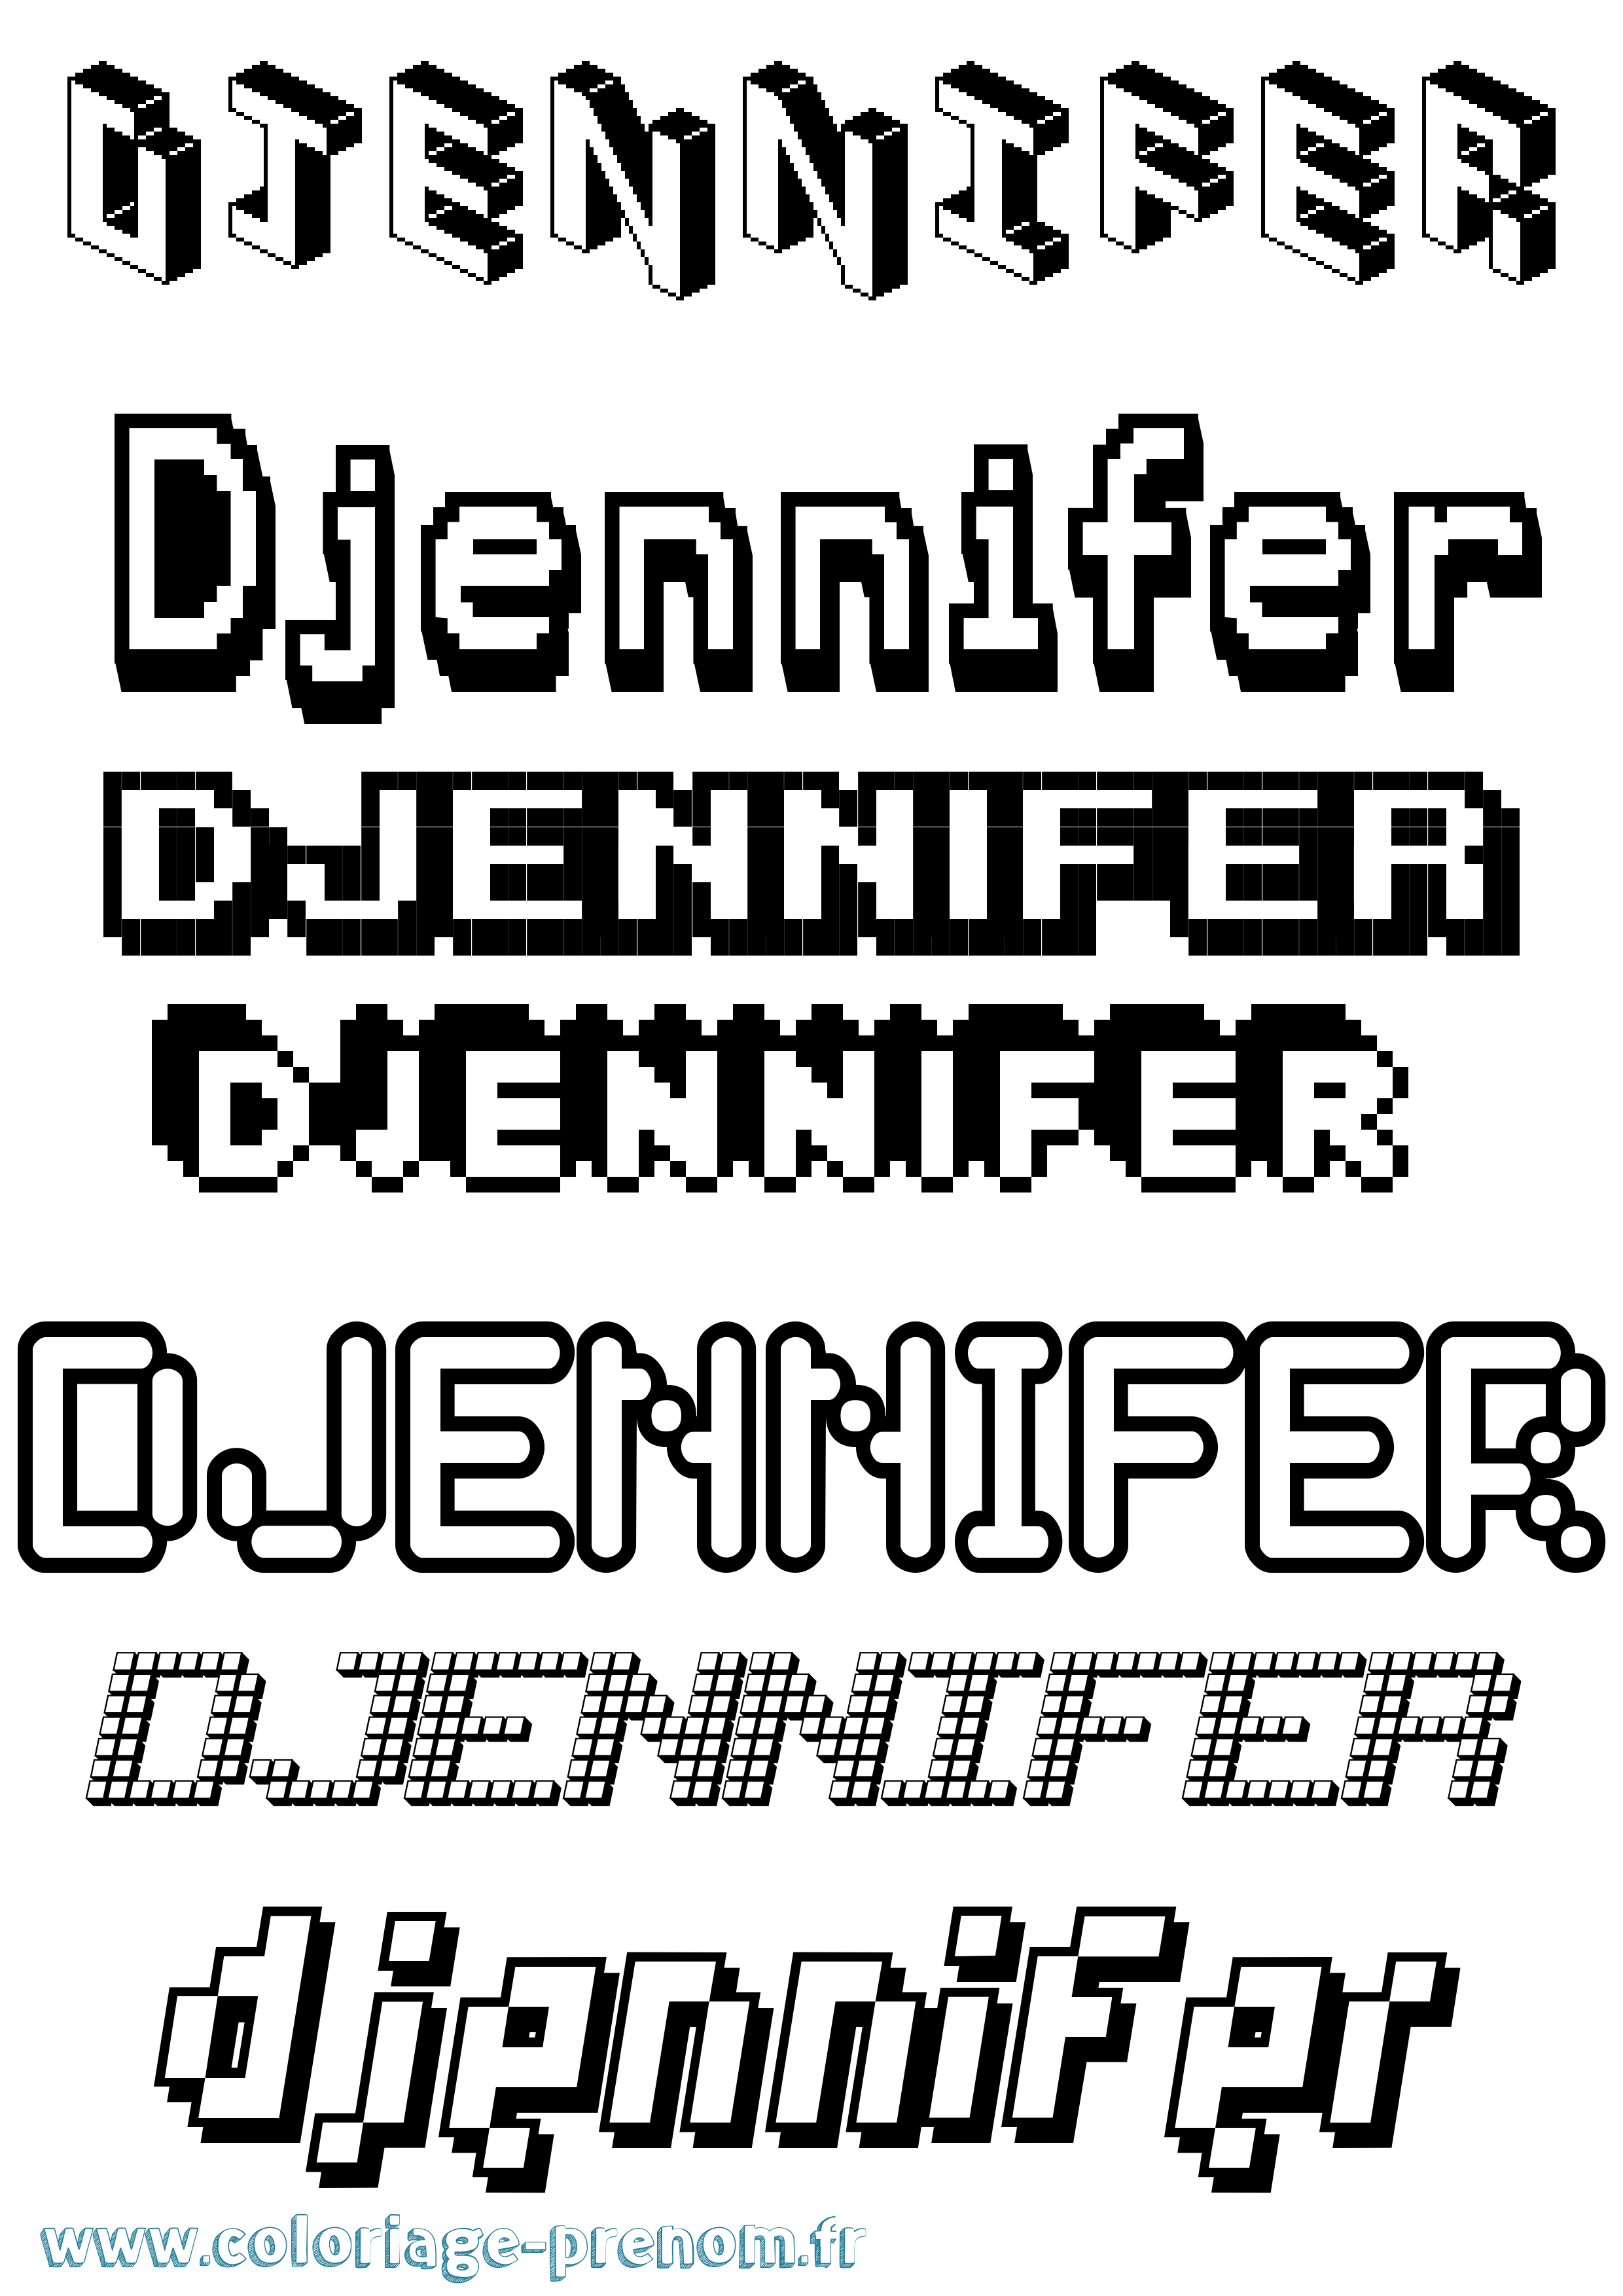 Coloriage prénom Djennifer Pixel